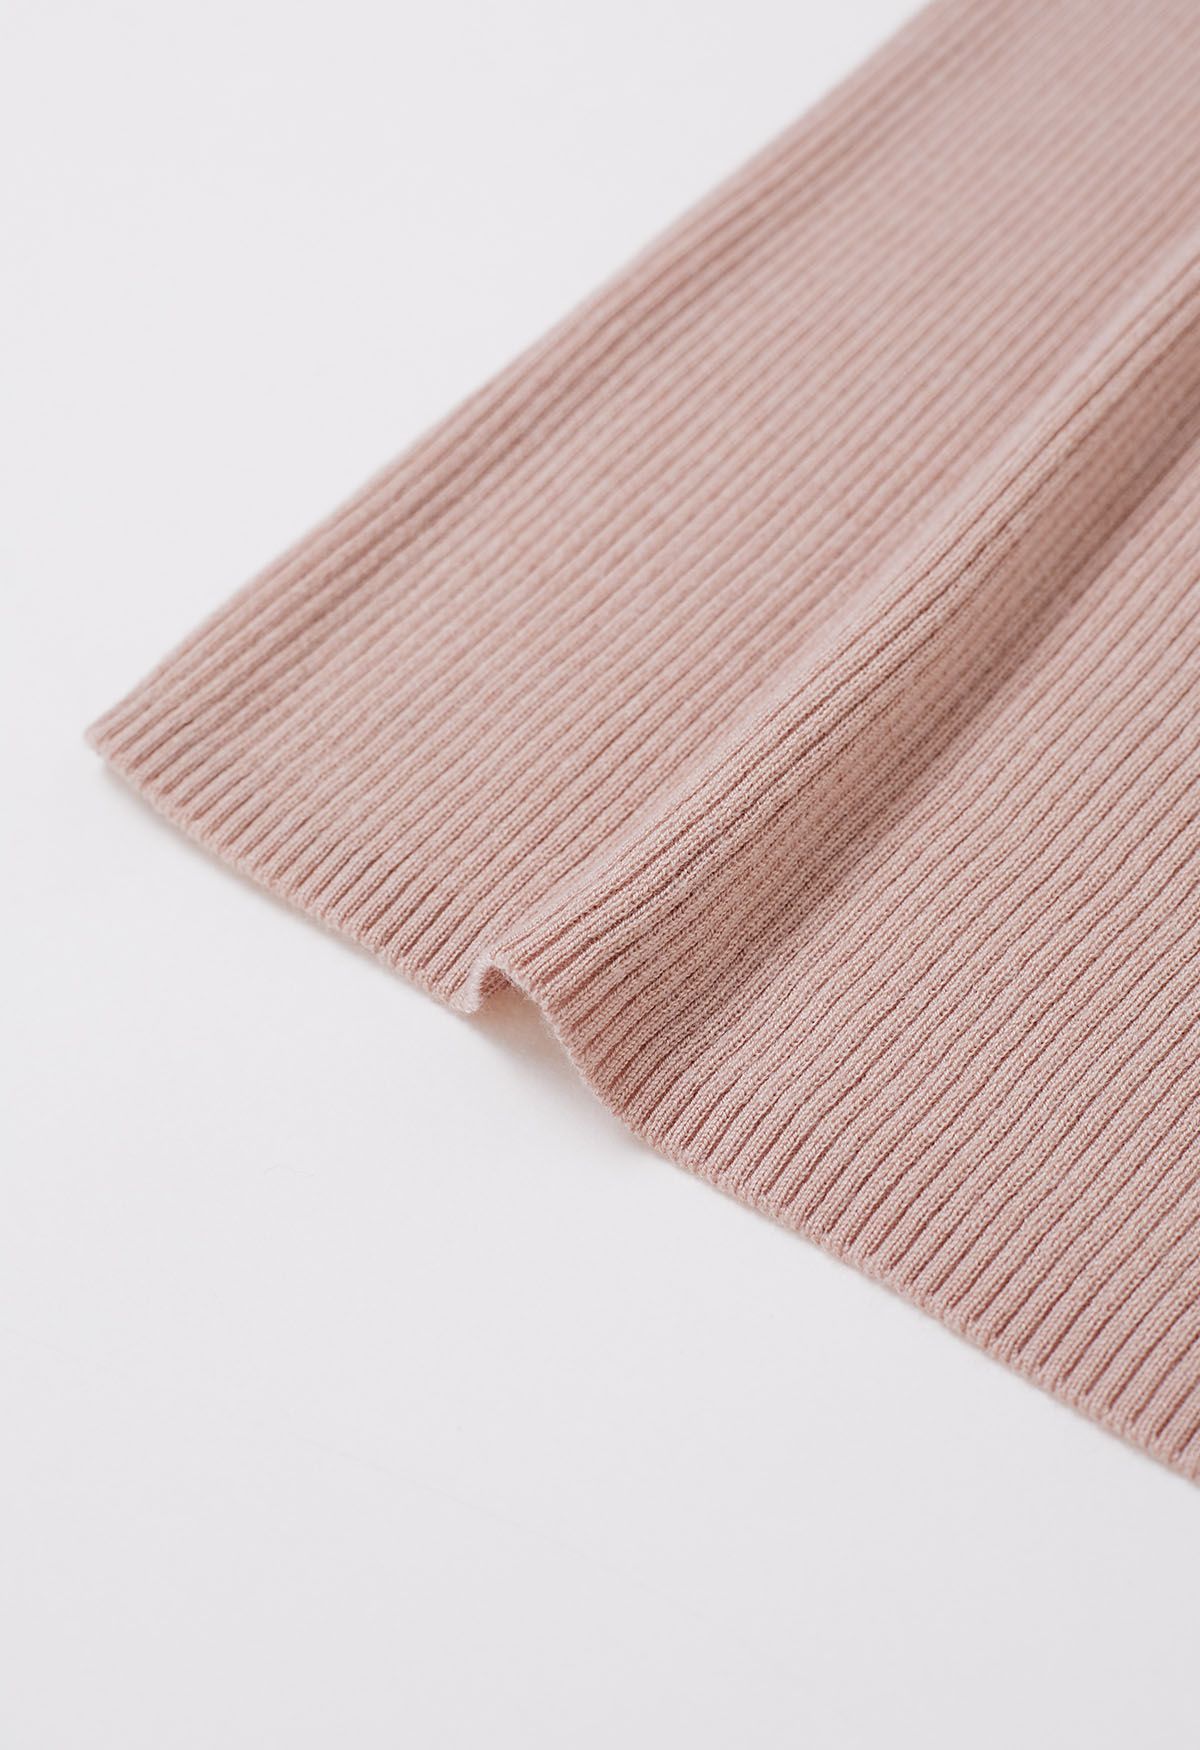 Color Blocked Neckline Knit Top in Pink